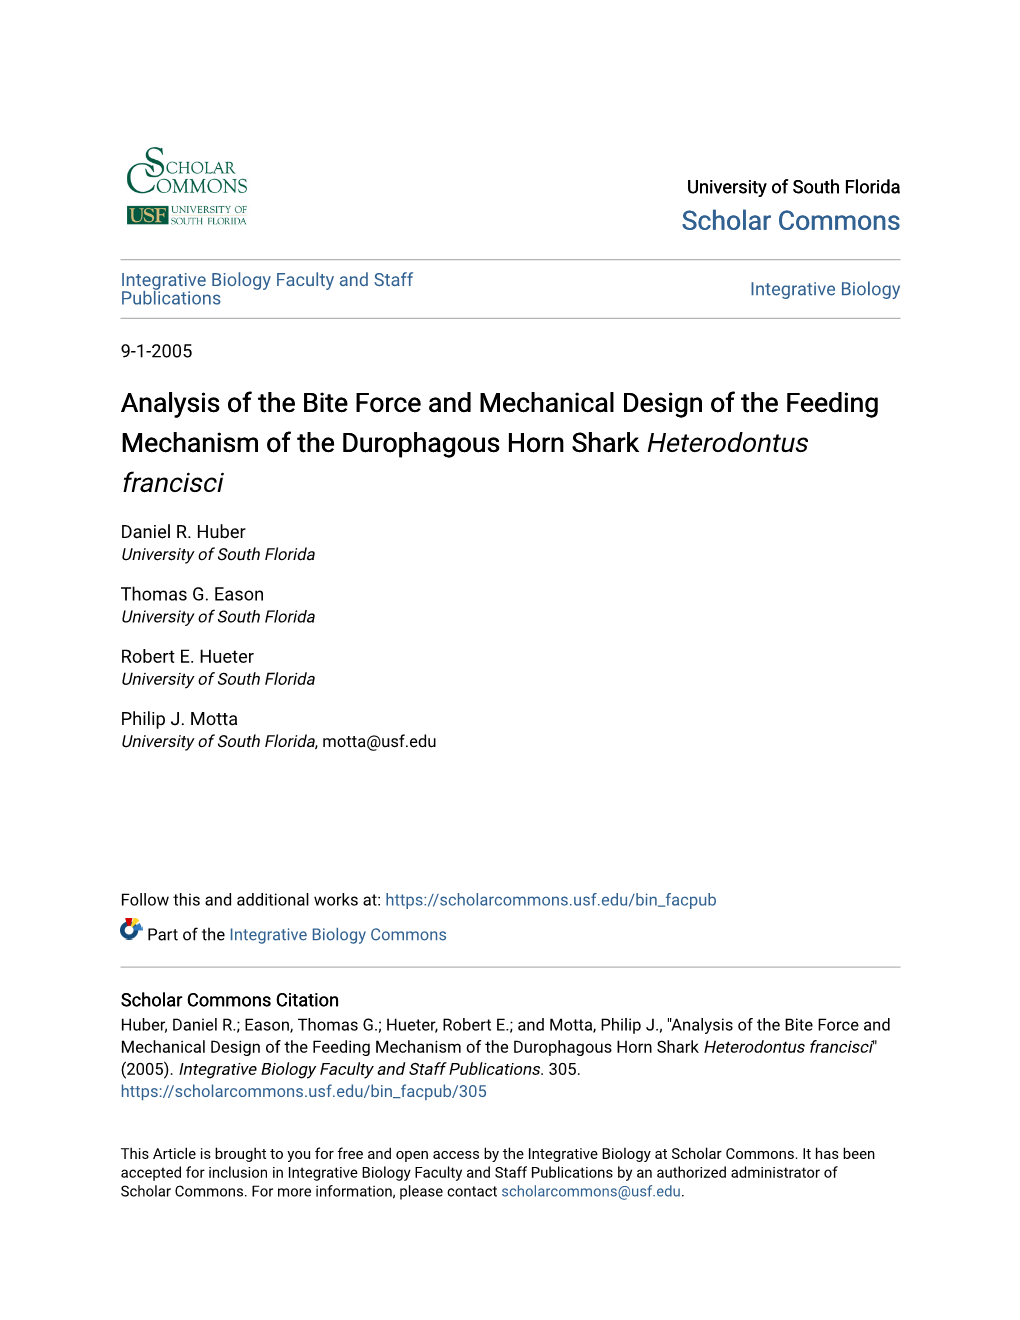 Analysis of the Bite Force and Mechanical Design of the Feeding Mechanism of the Durophagous Horn Shark Heterodontus Francisci